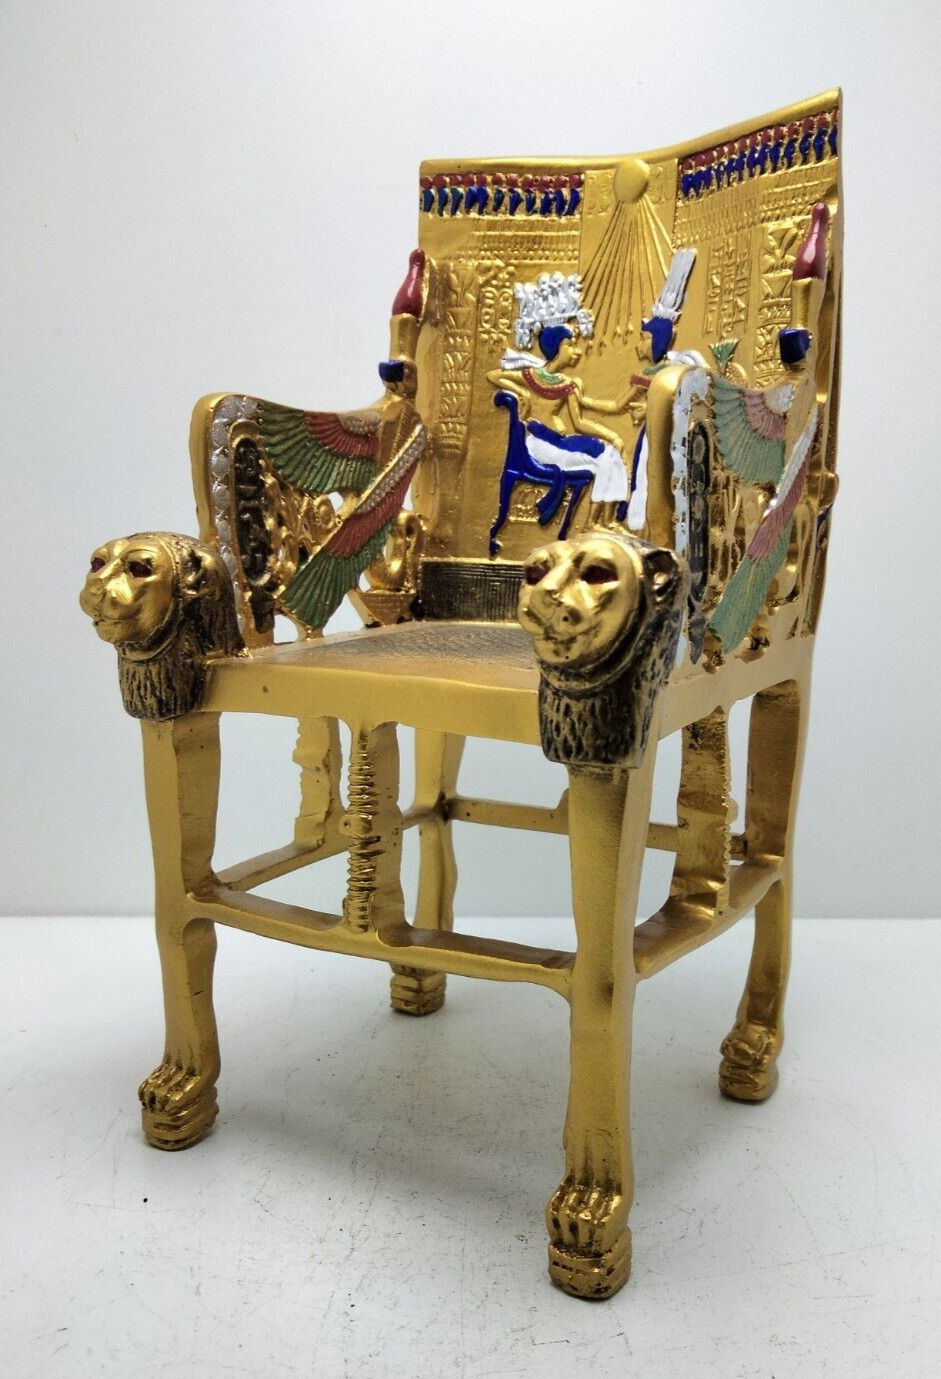 RARE ANCIENT EGYPTIAN ANTIQUITIES Figure Throne Of Pharaonic King Tutankhamun BC